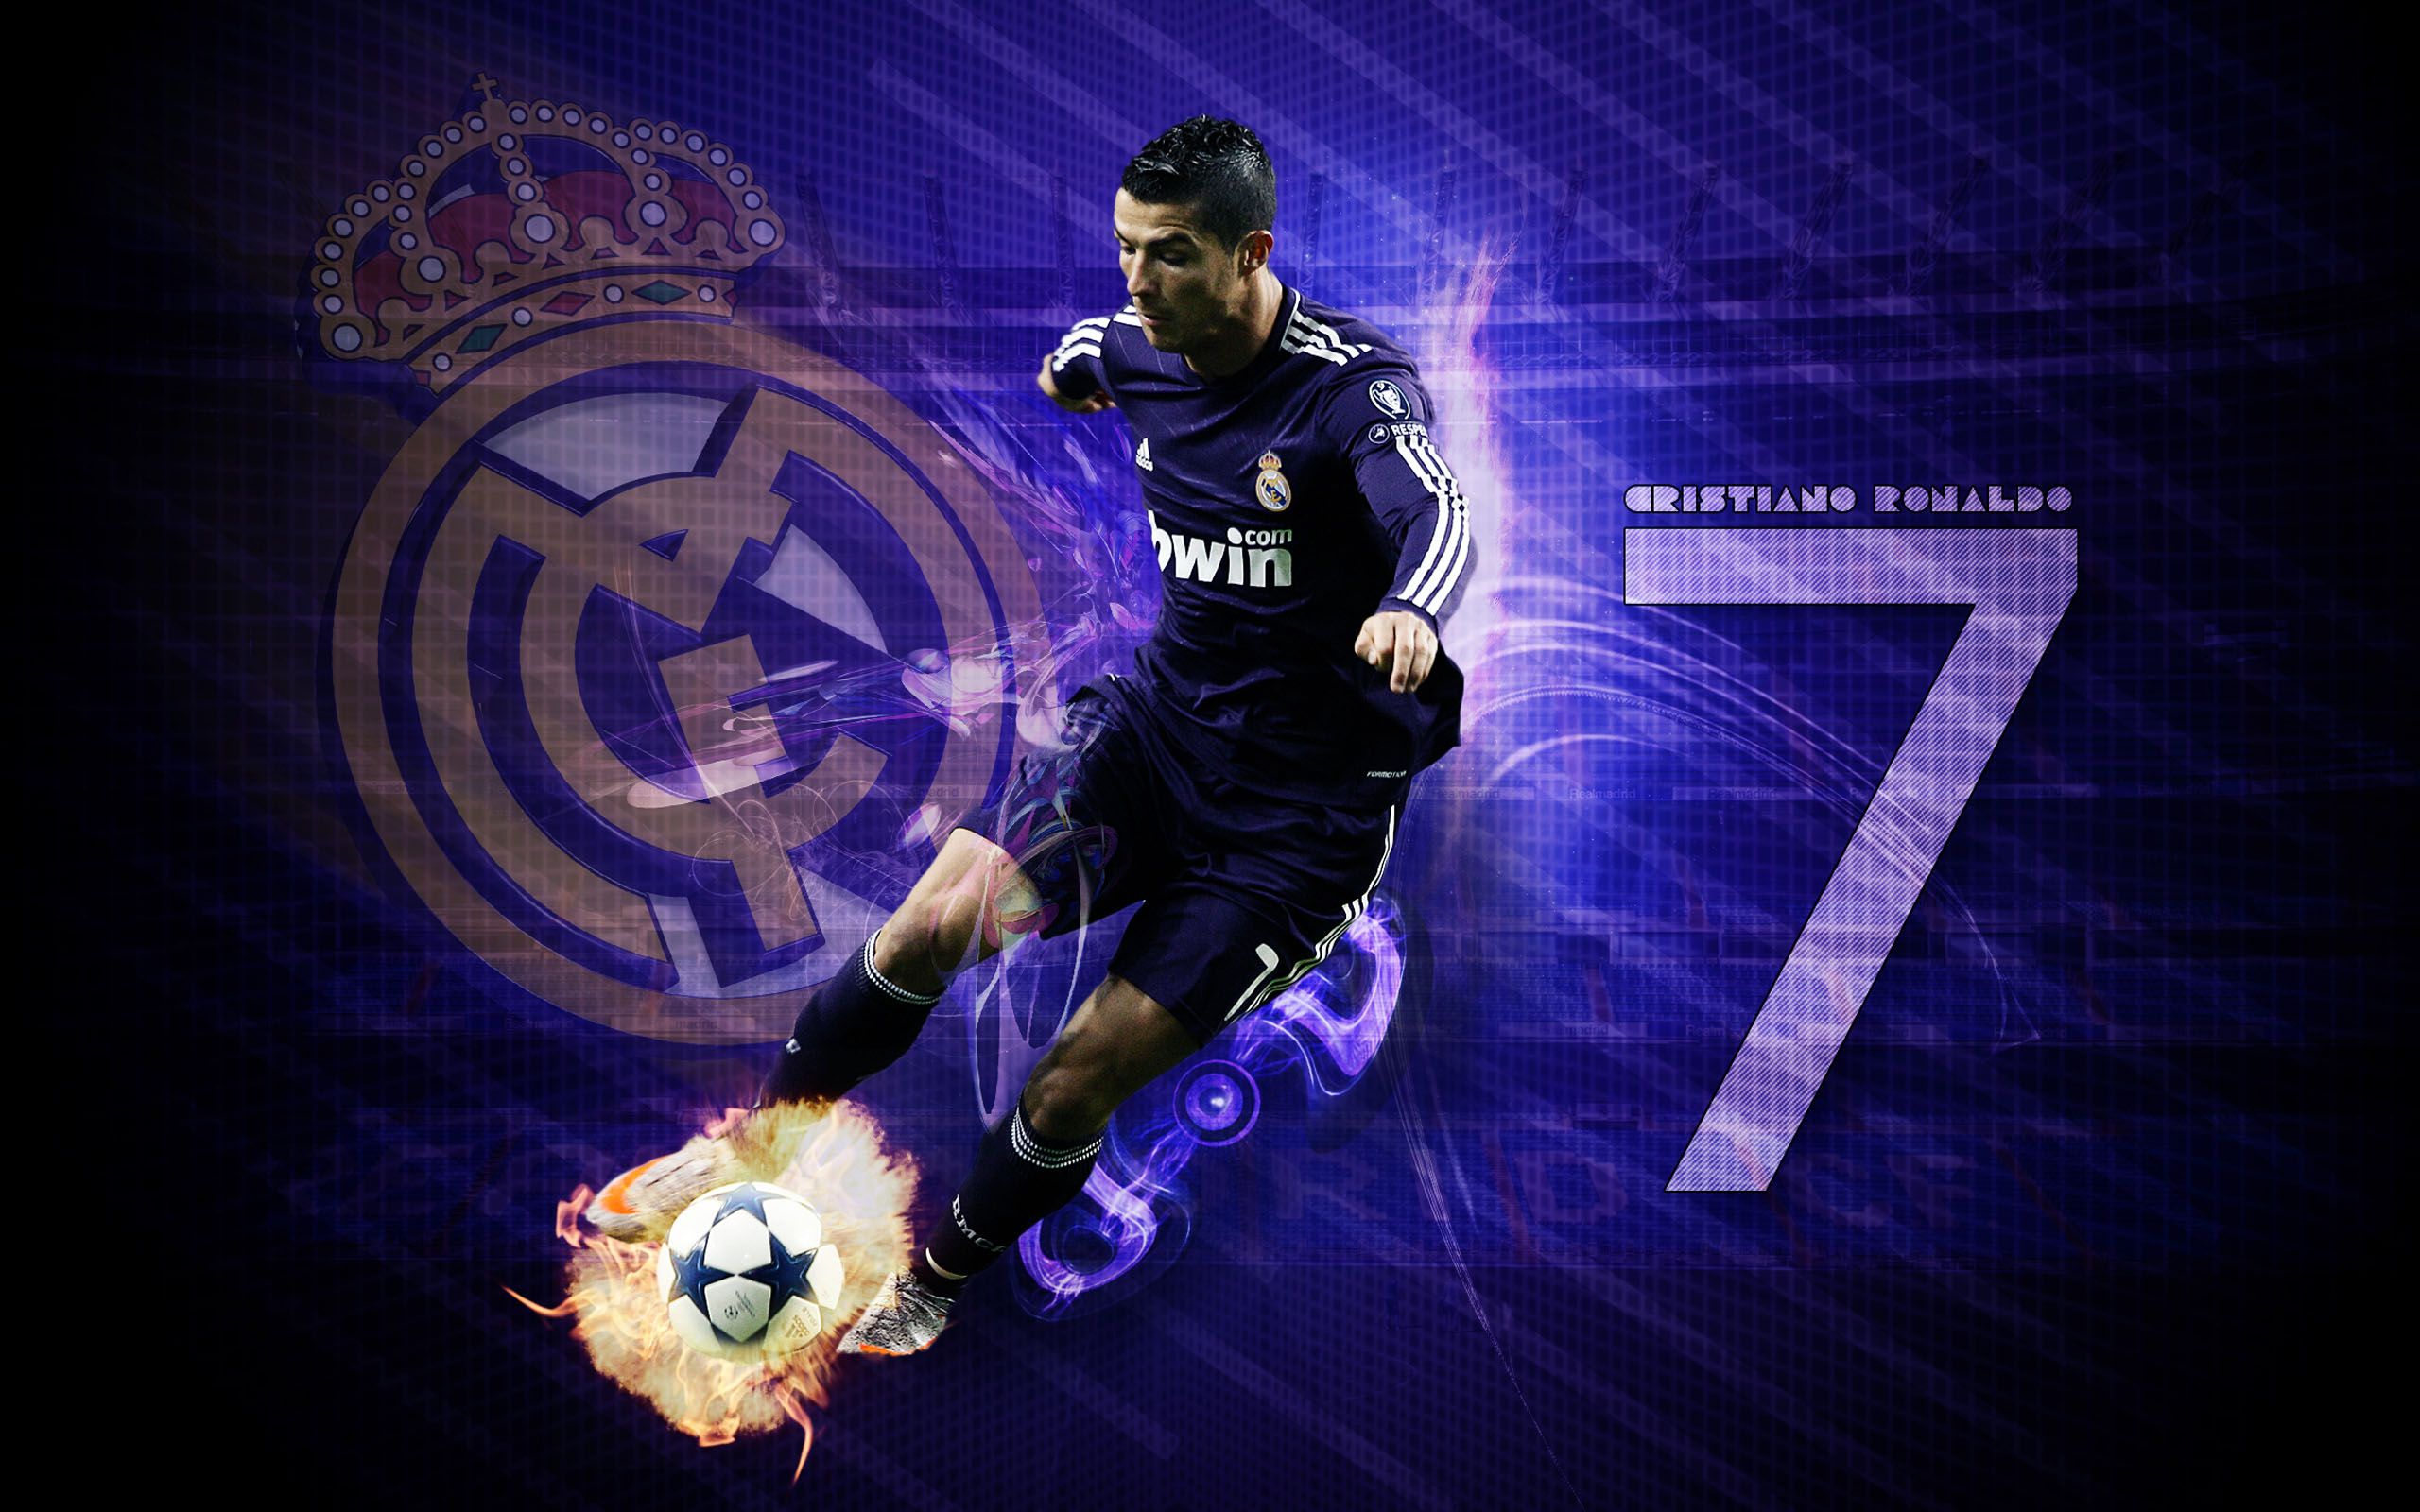 Cristiano Ronaldo Real Madrid Wallpaper Sports Image Real Madrid